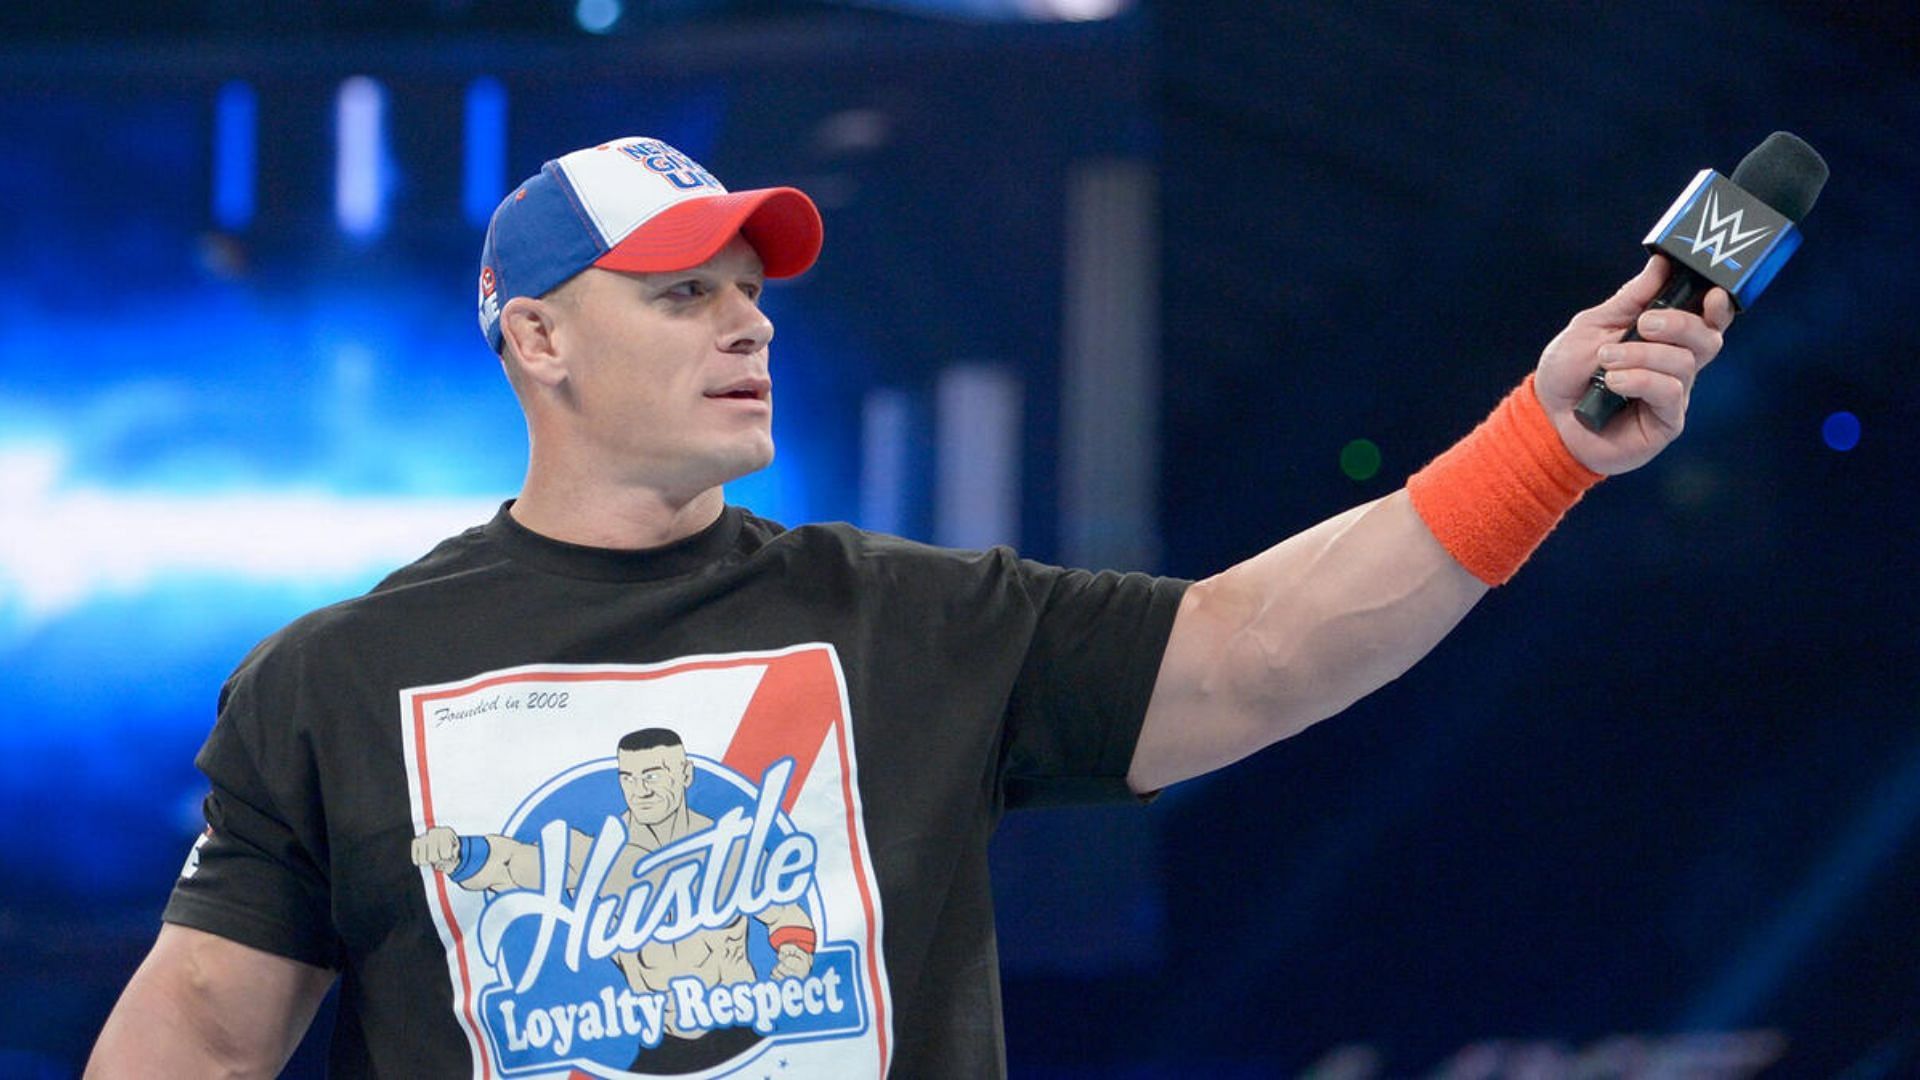 John Cena is a 16-time WWE World Champion.